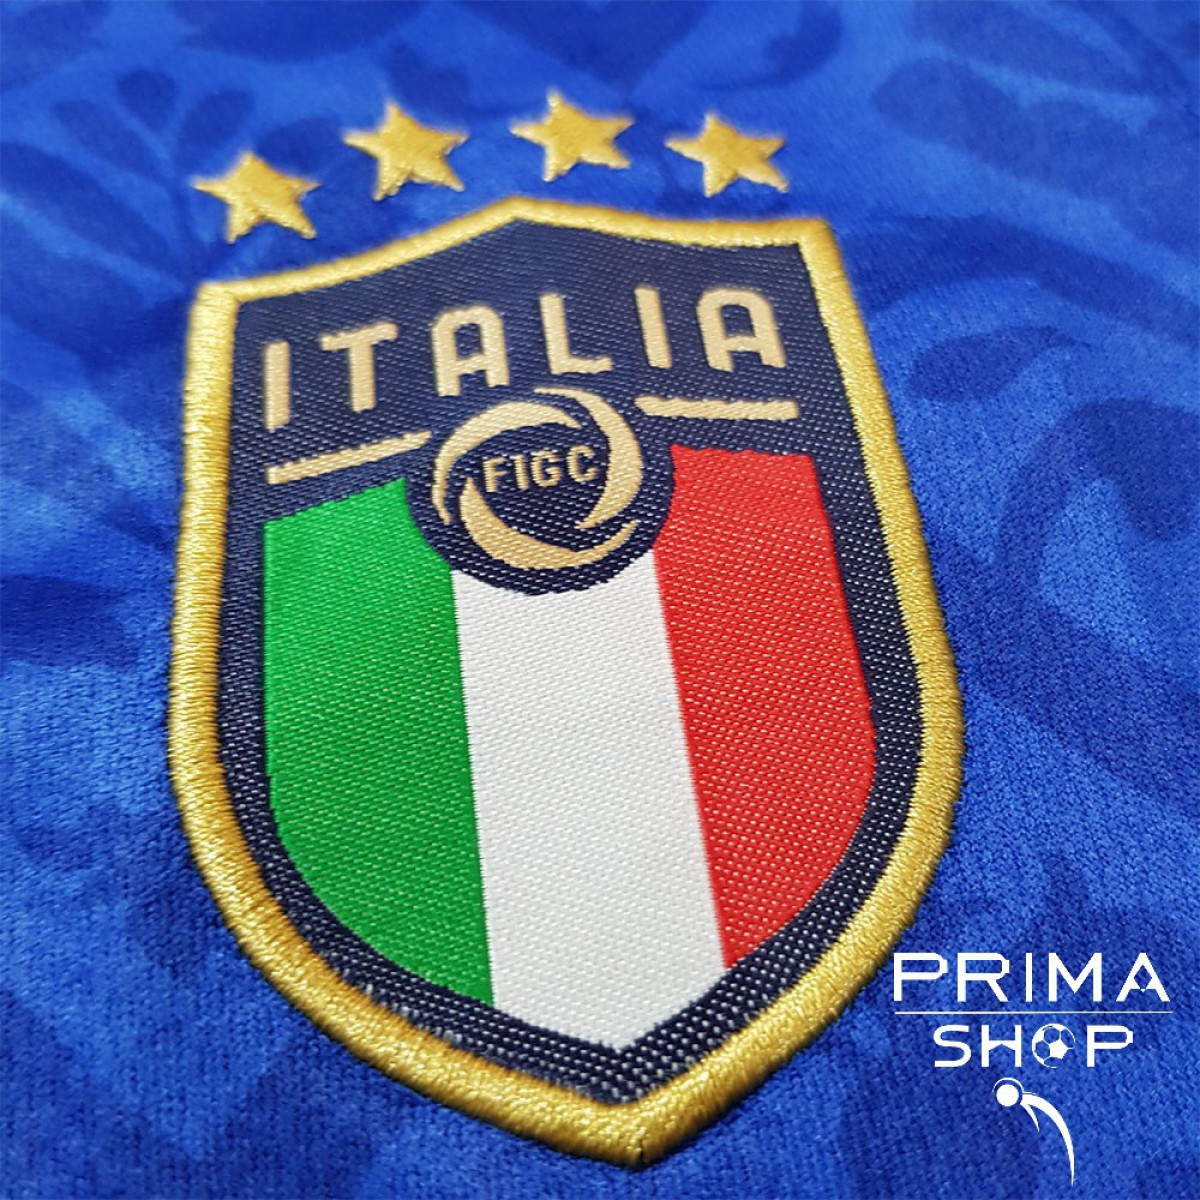 لباس بچه گانه تیم ملی ایتالیا 2020 | پیراهن شورت بچه گانه ایتالیا